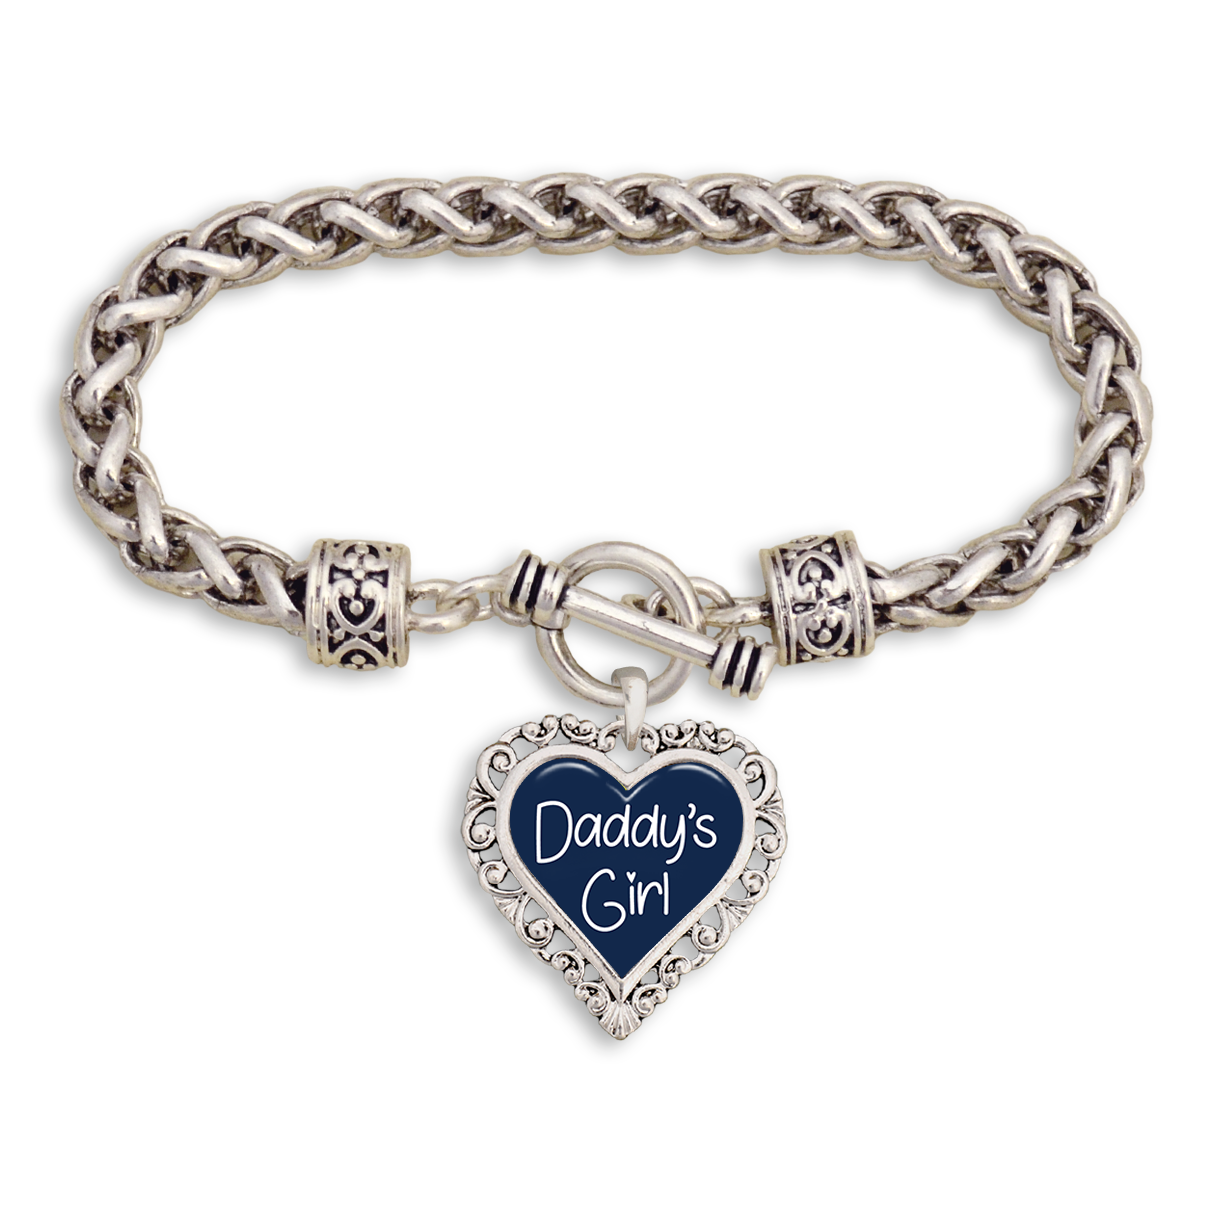 Daddy's Girl Heart Clasp Bracelet